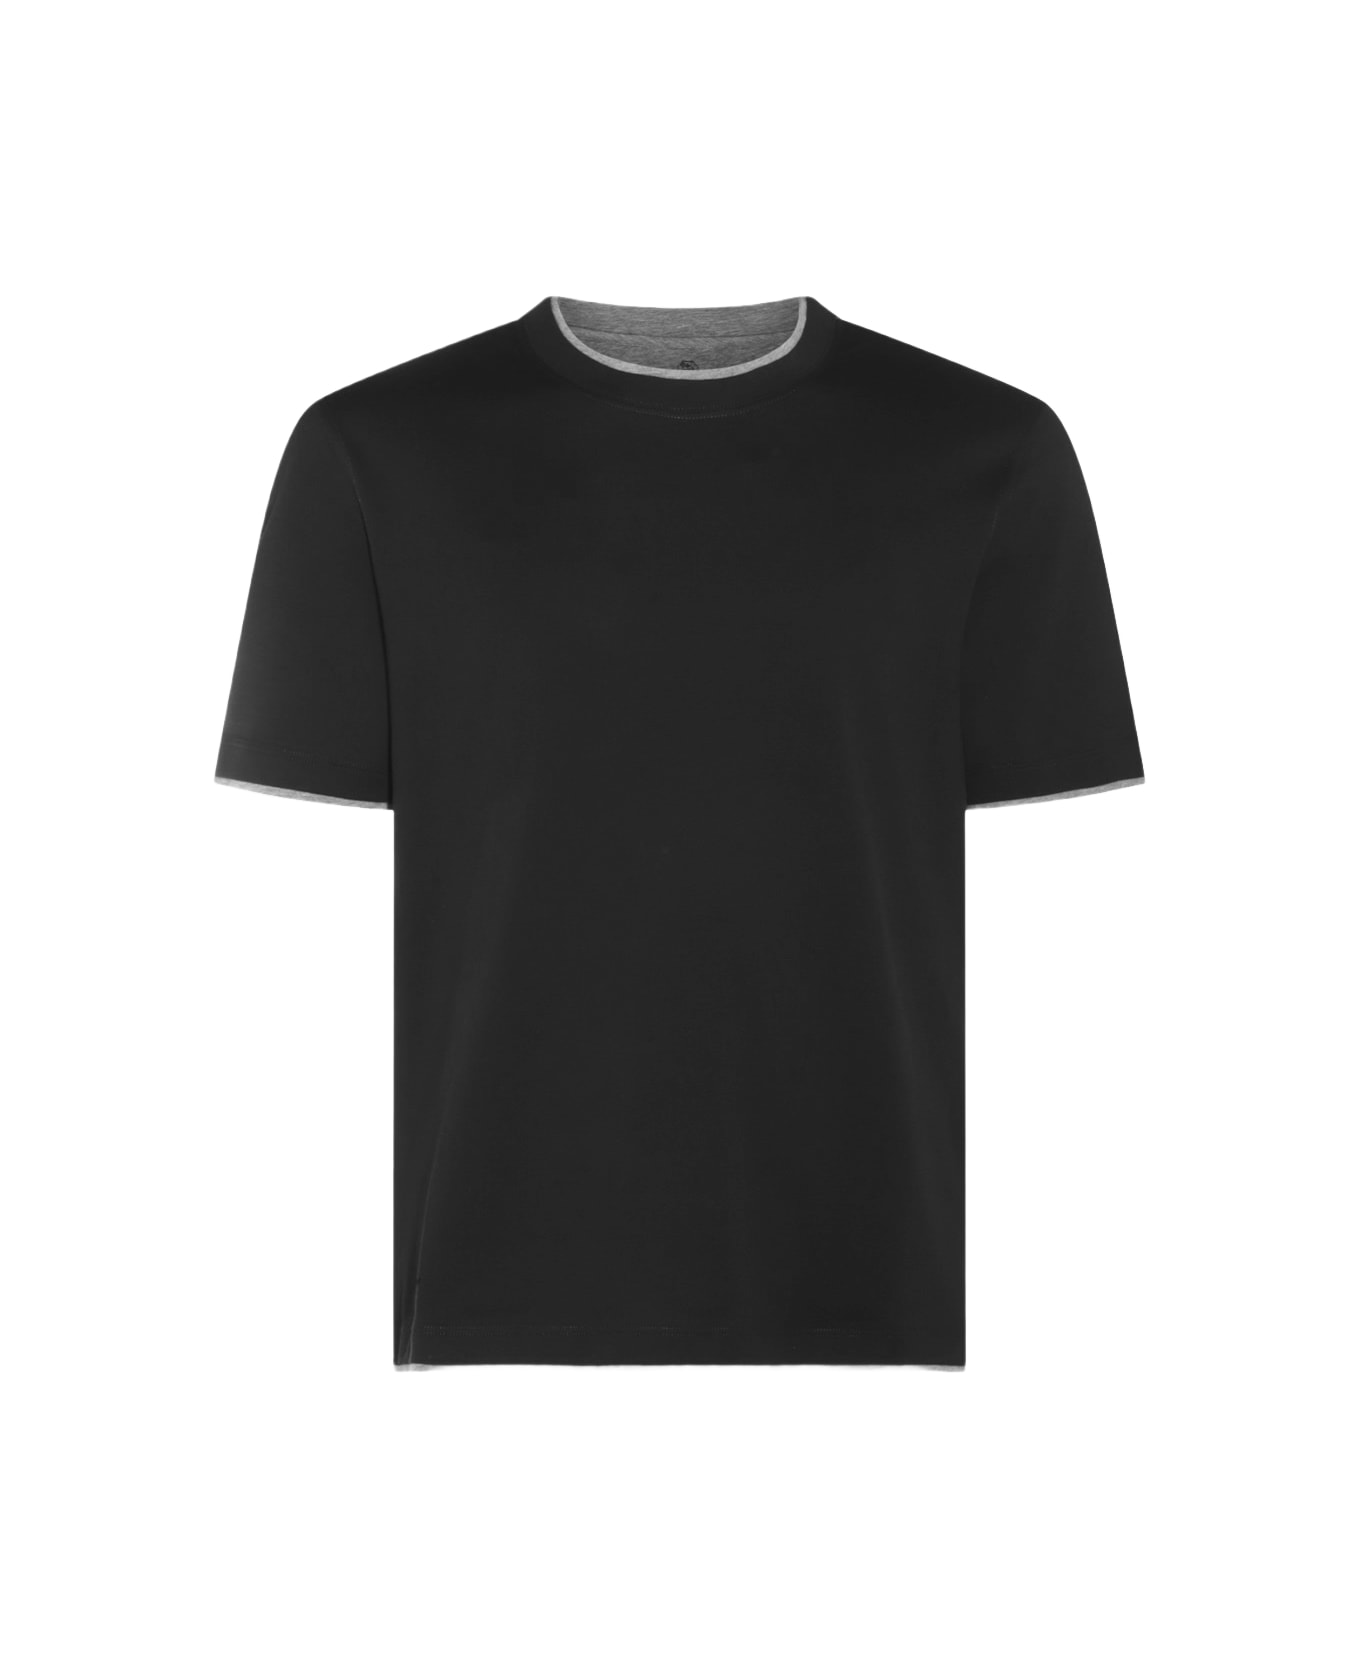 Brunello Cucinelli Black Cotton T-shirt